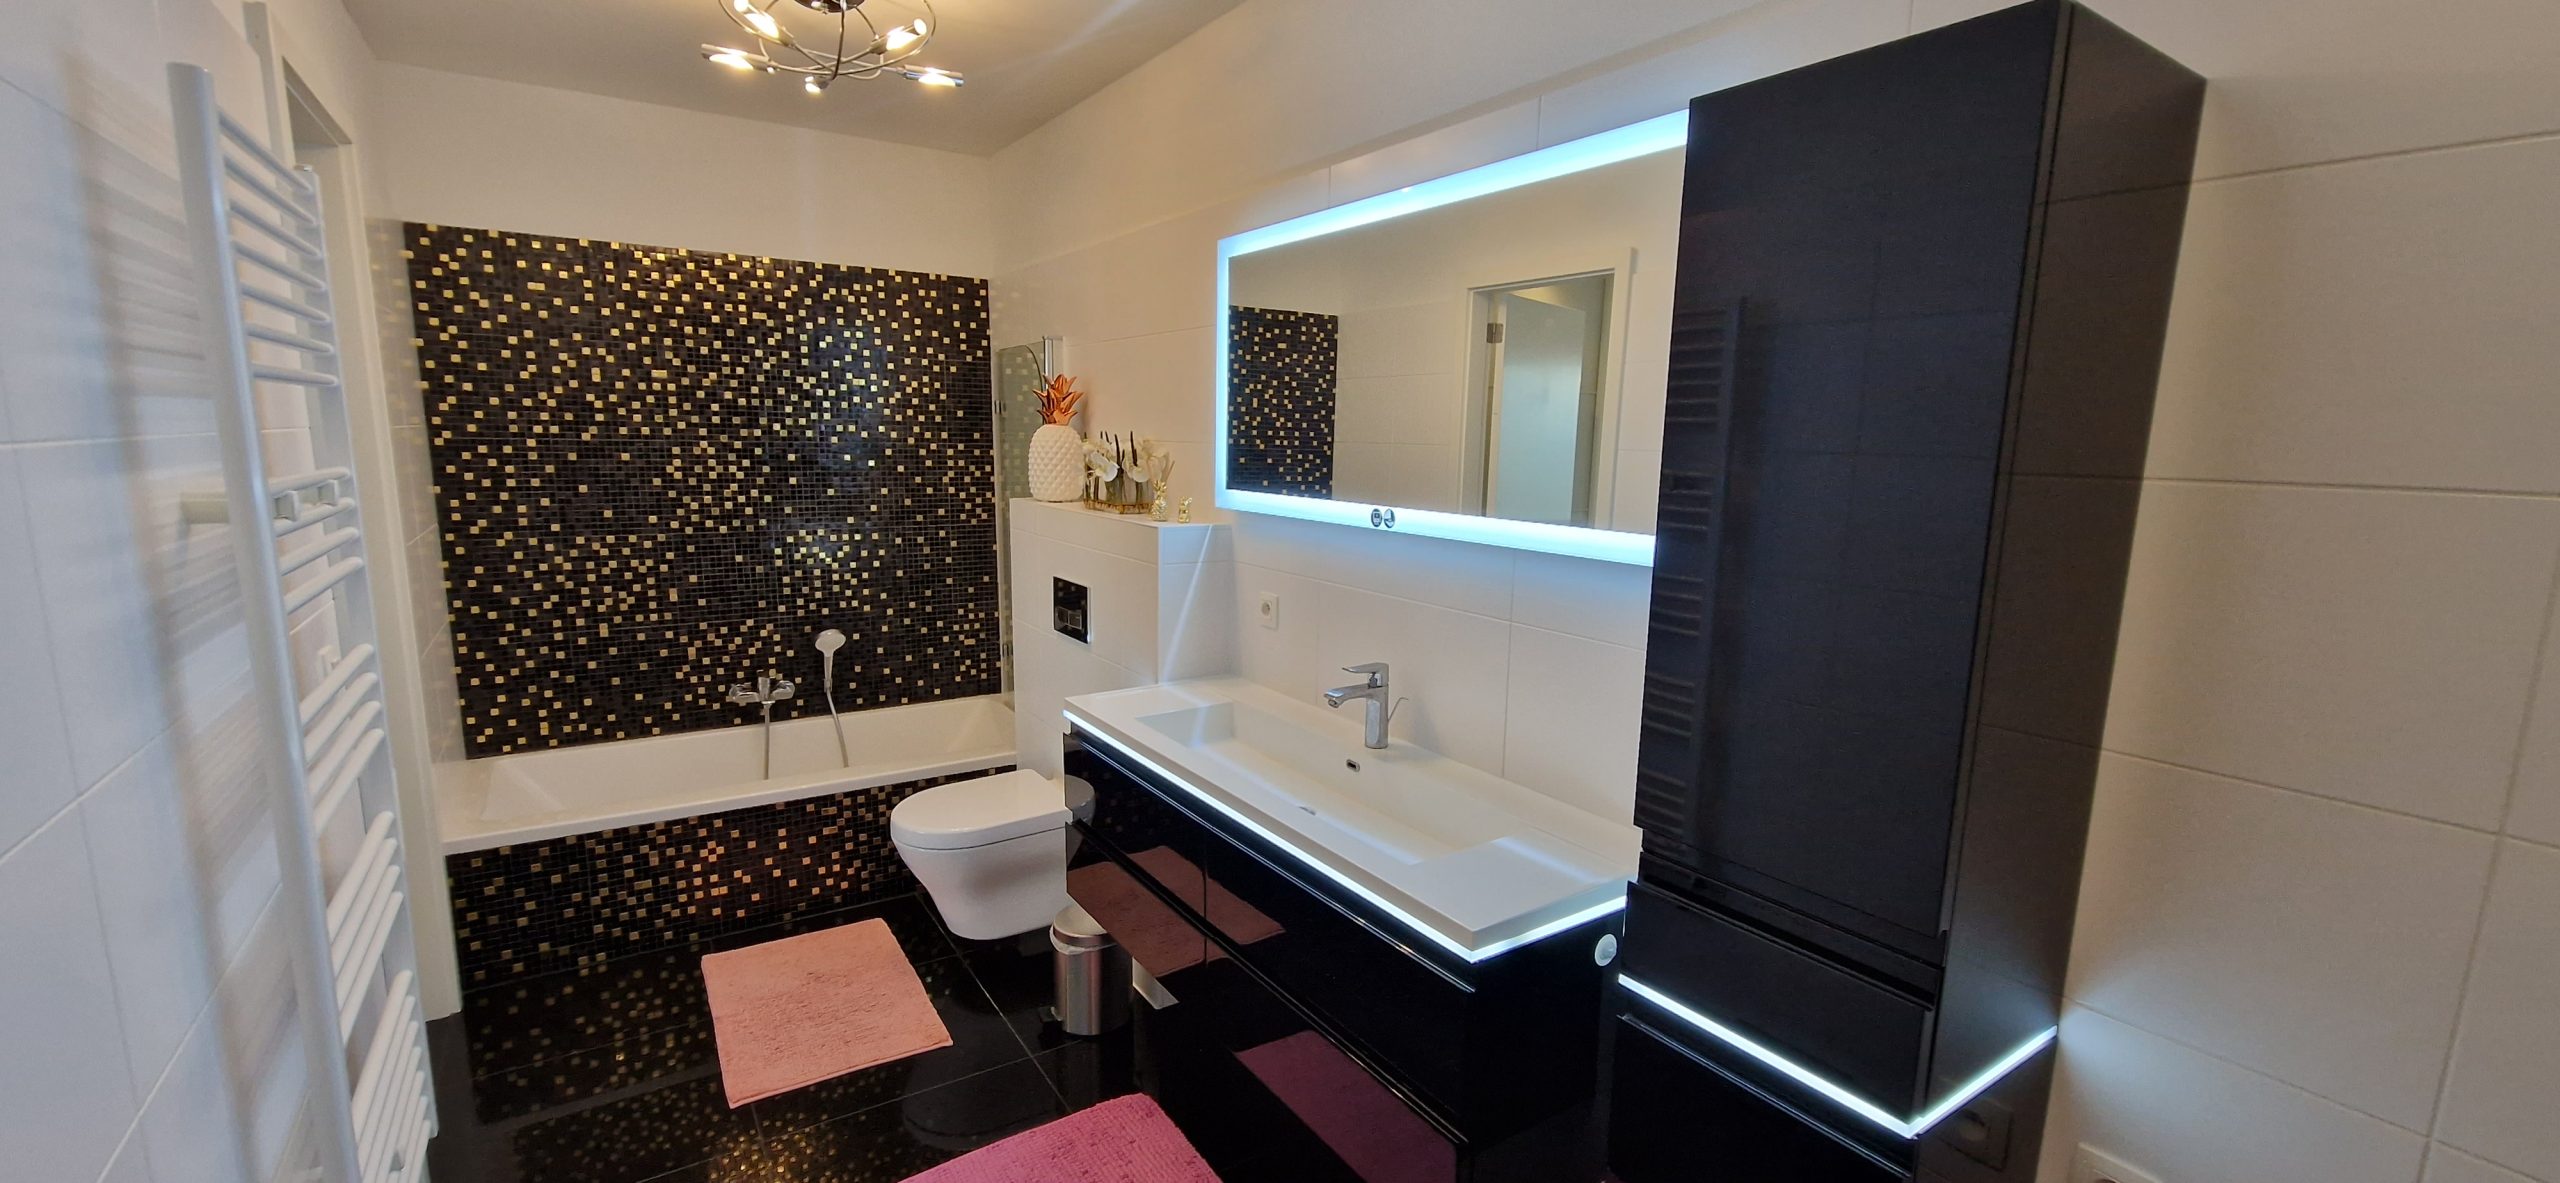 apartment-for-rent-in-lambert-bathroom